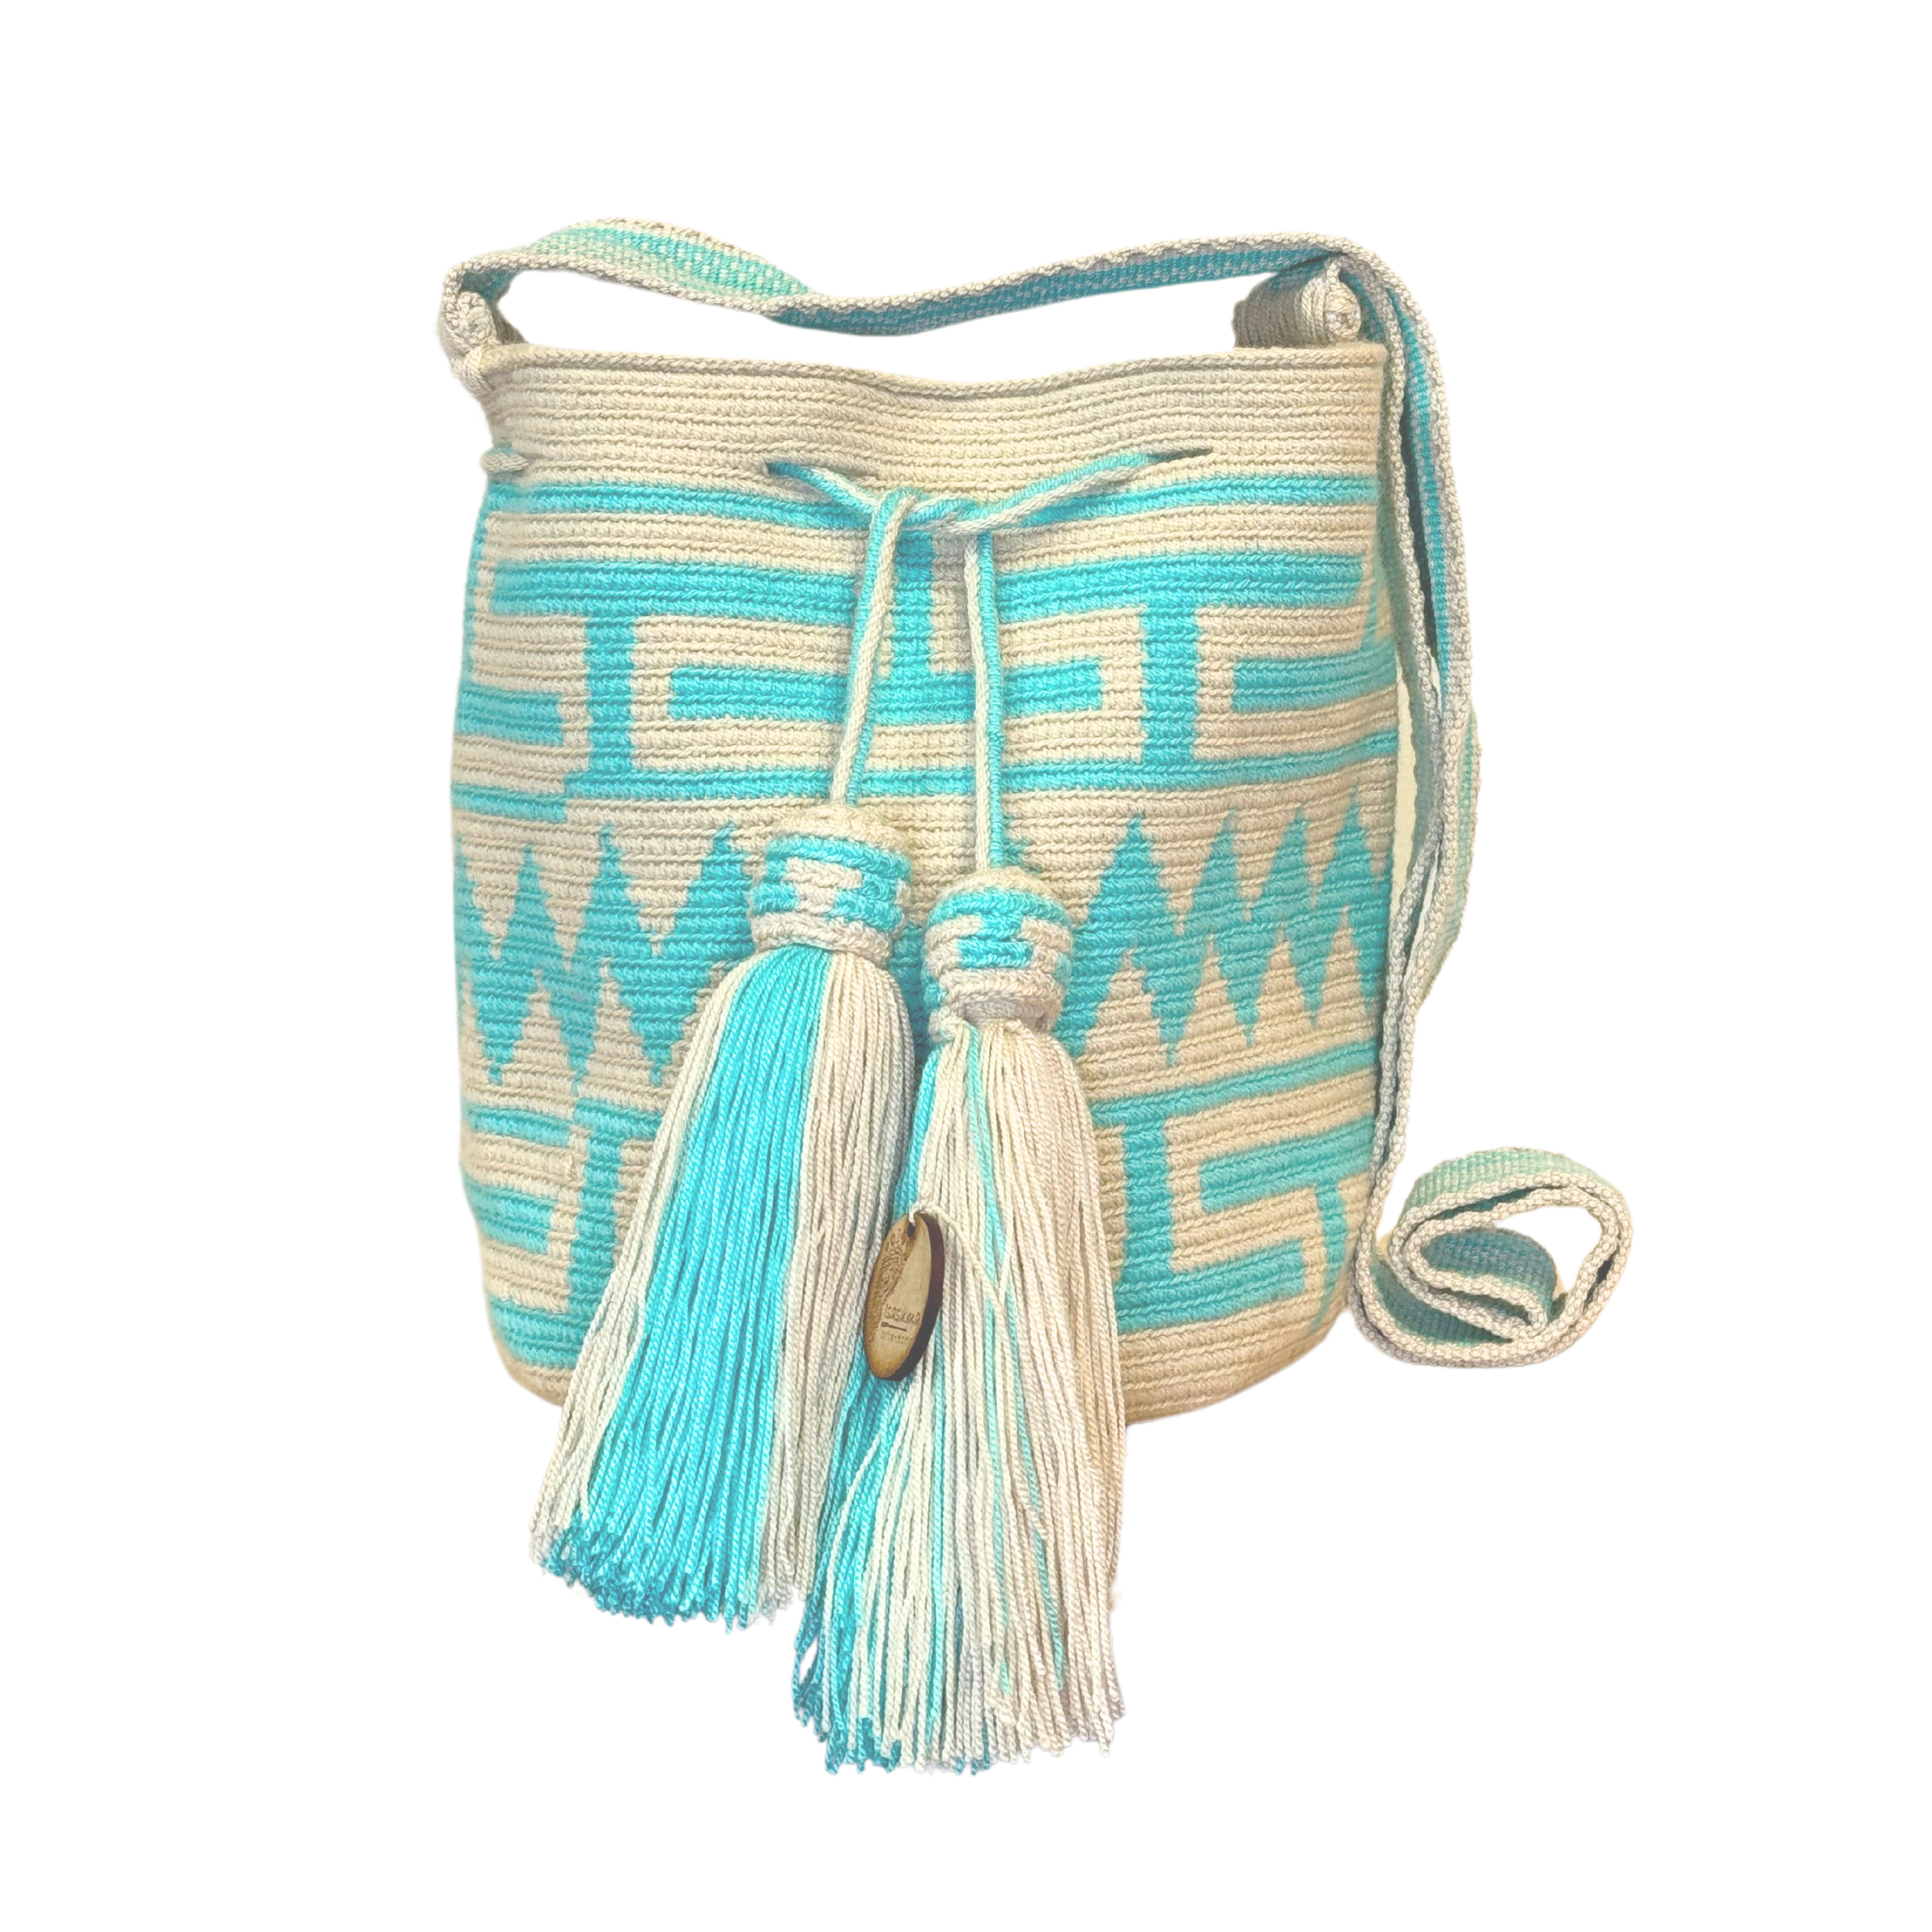 Exclusive Wayuu mochila bag | Medium Woven Crossbody Handmade Gorrito Mochila | Beige and teal zig zag solid strap